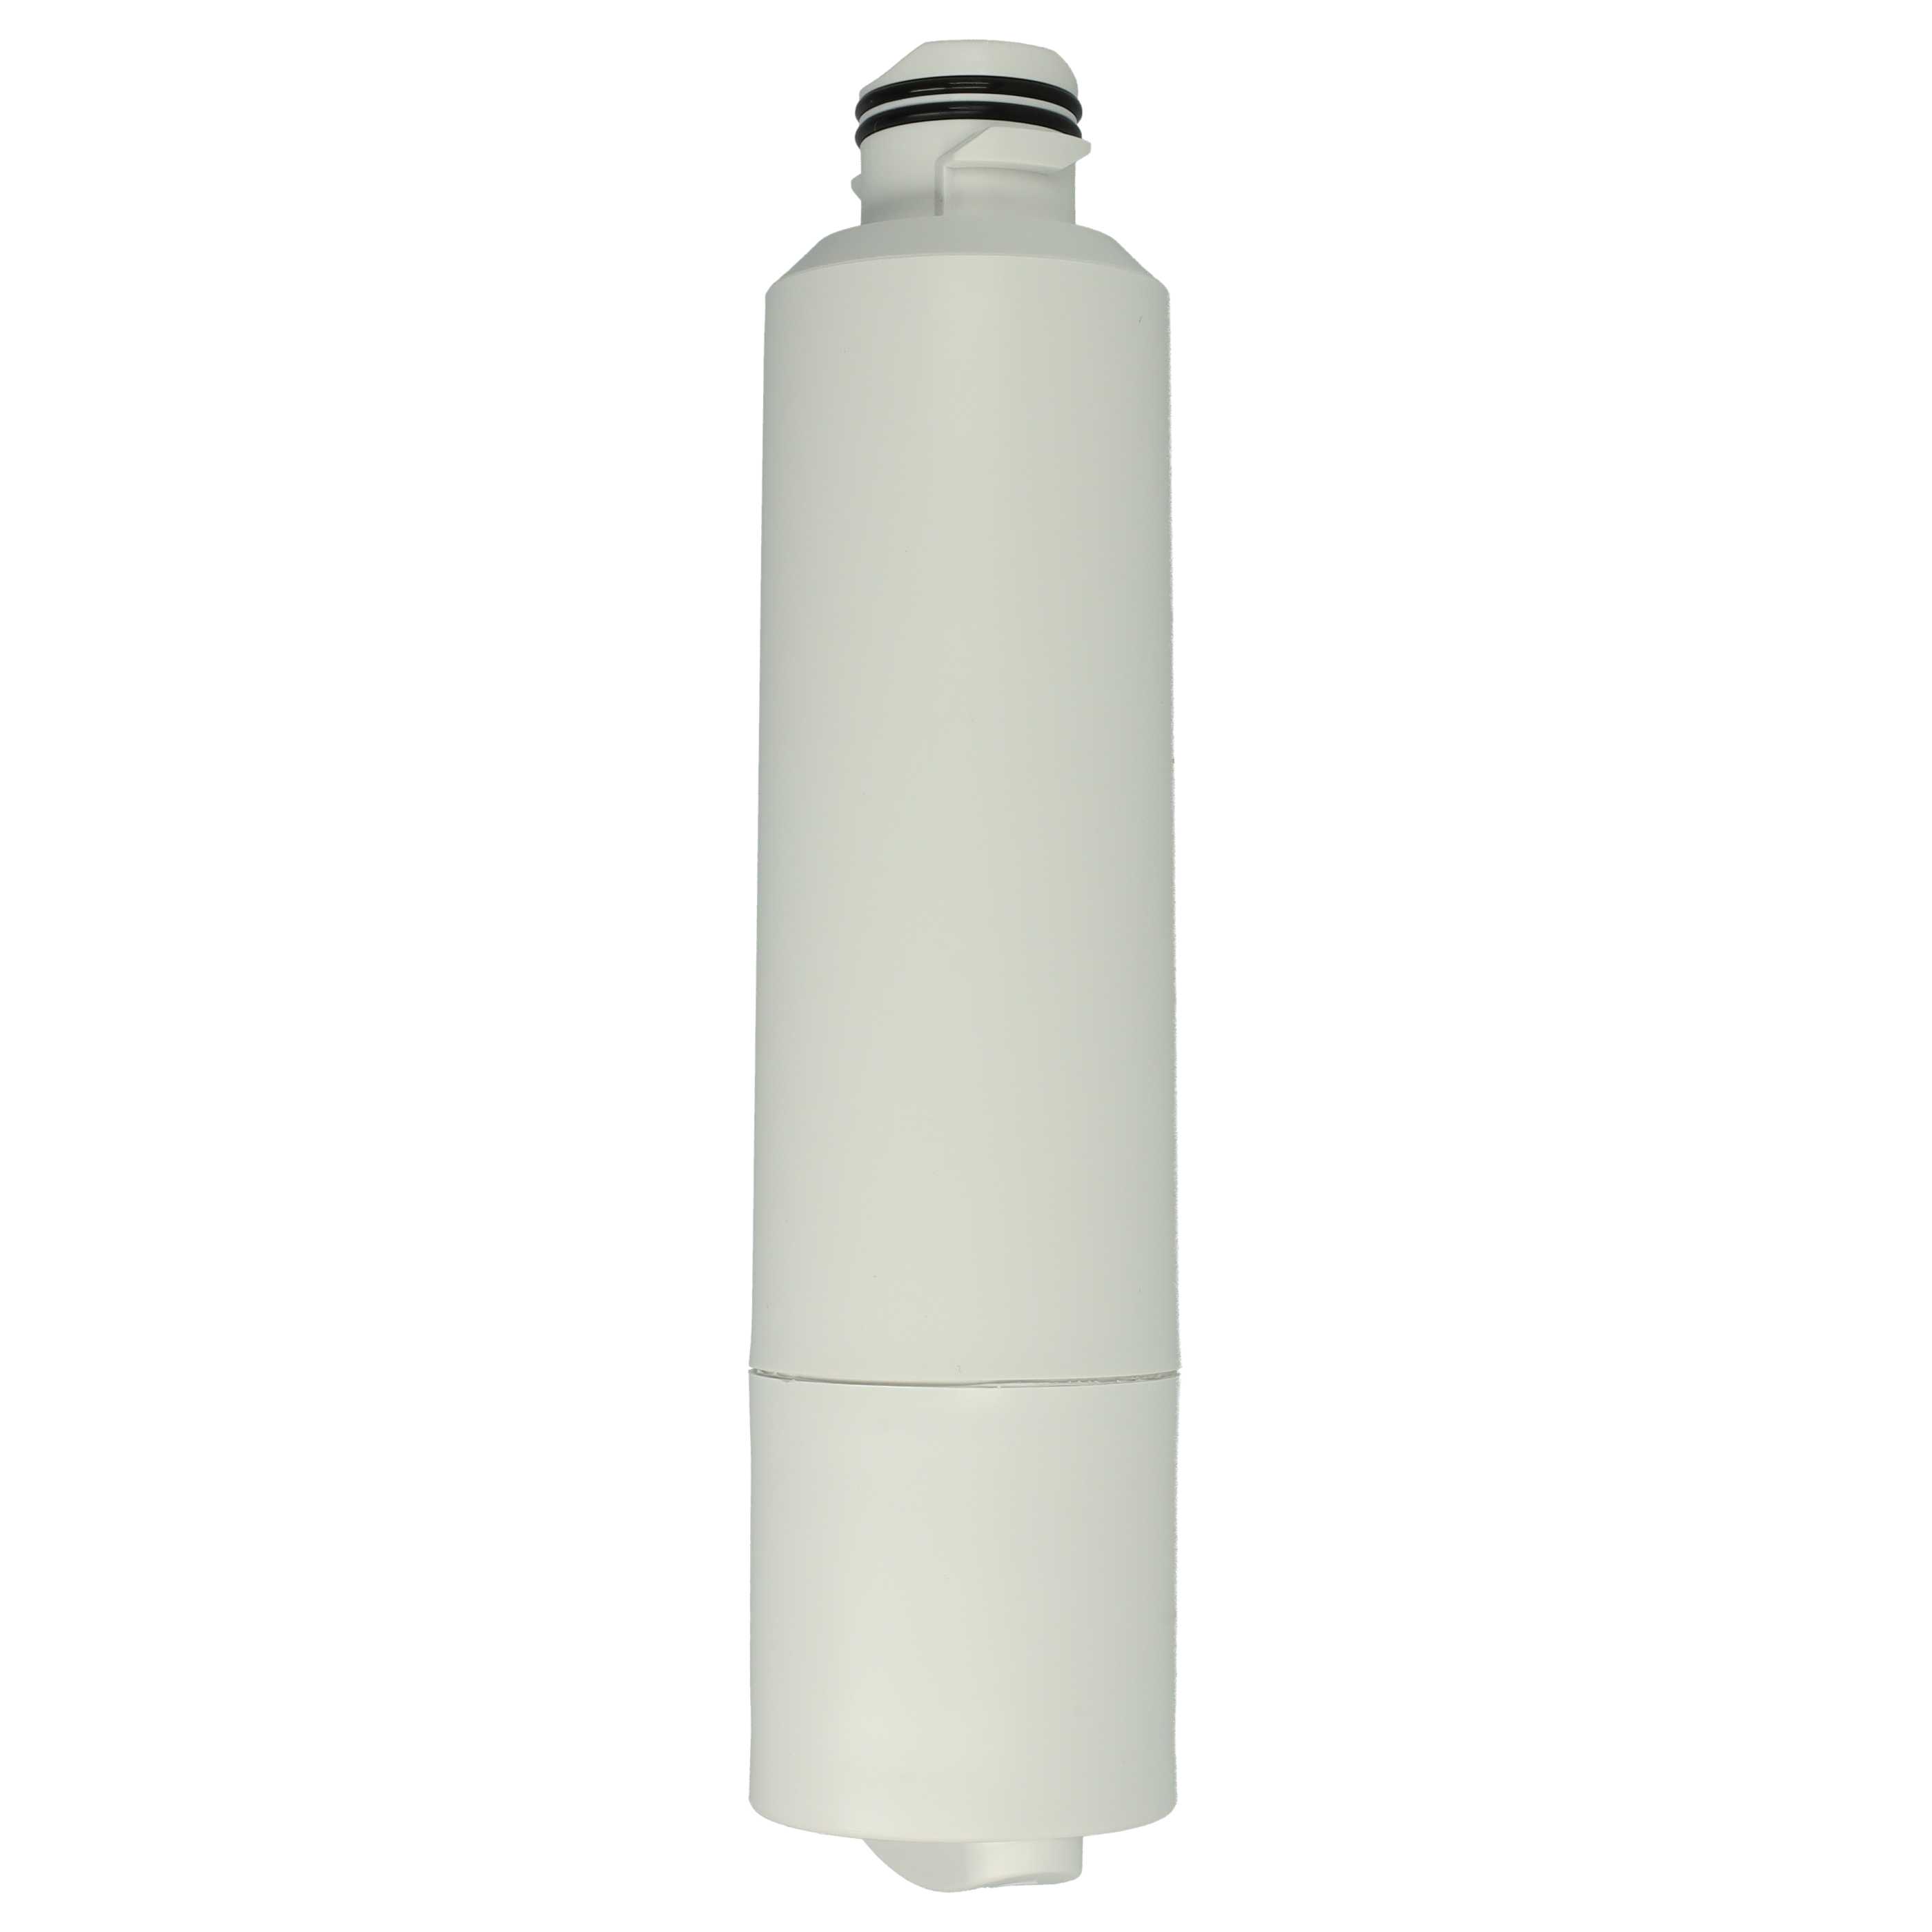 5x Fridge Water Filter replaces Samsung DA29-00020A, DA29-00020BF, DA29-00020BM for Side-by-Side Refrigerator